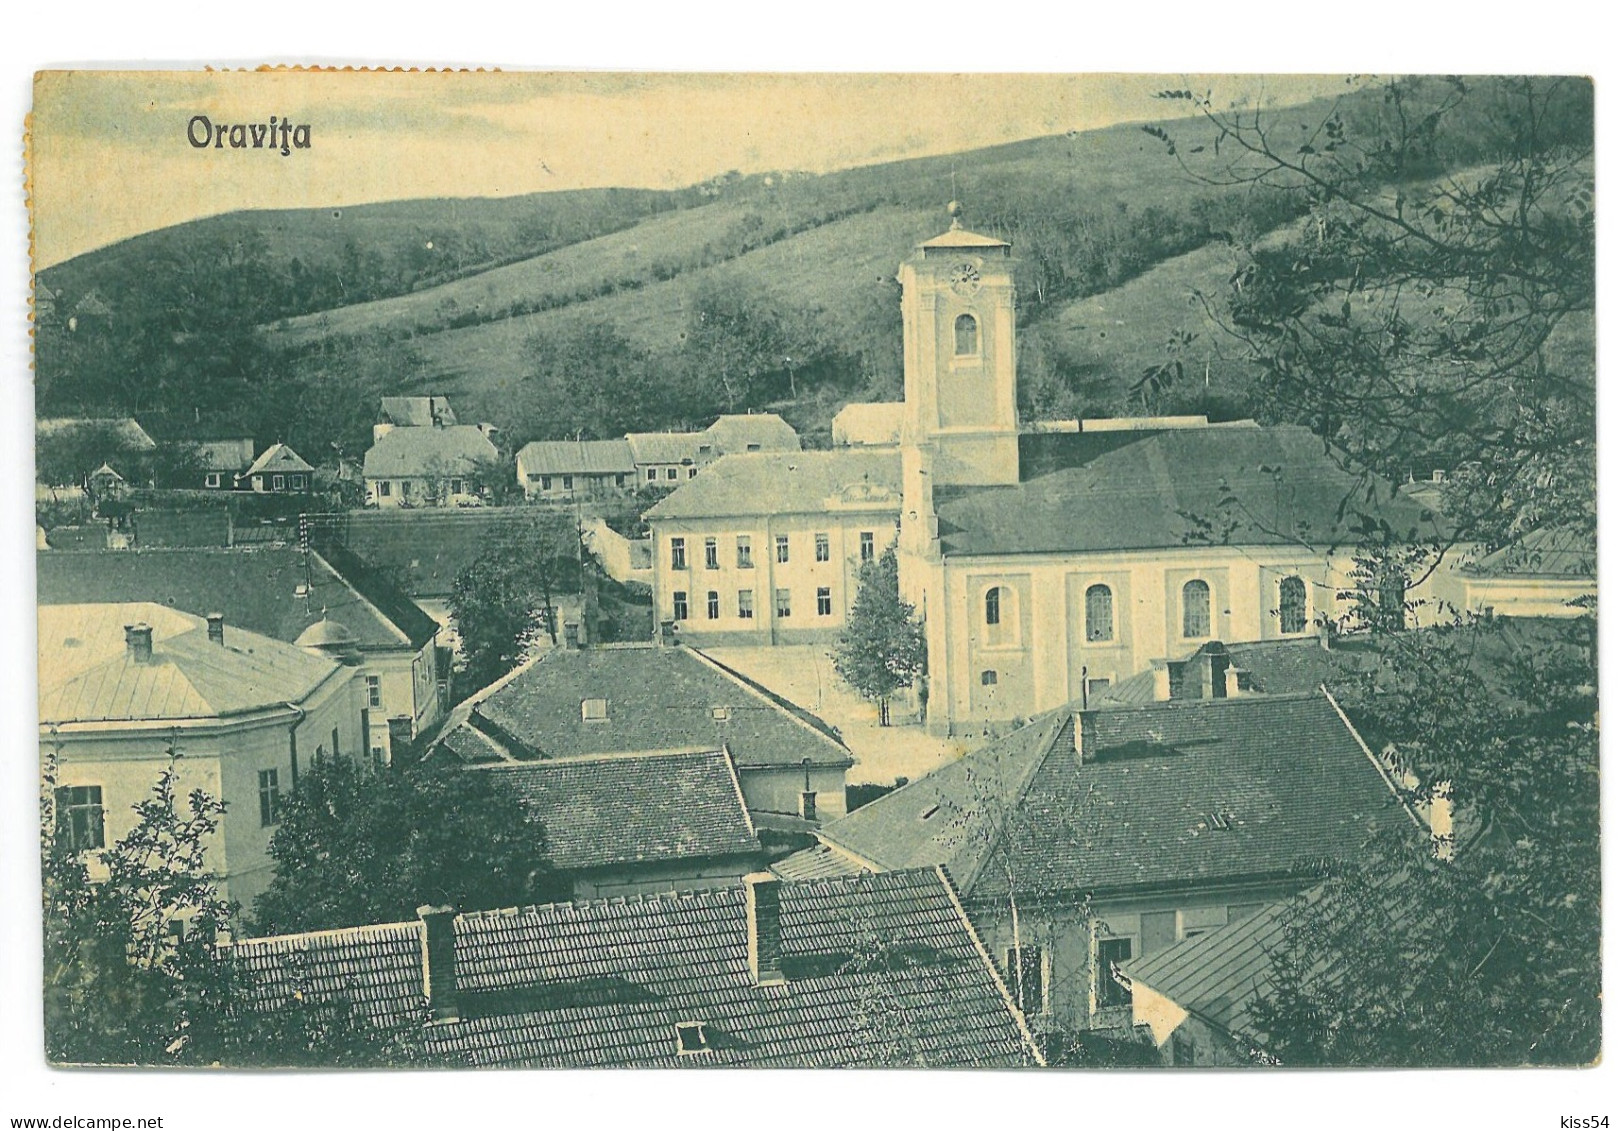 RO 45 - 20632 ORAVITA, Caras-Severin, Romania - Old Postcard - Used - 1923 - Roemenië